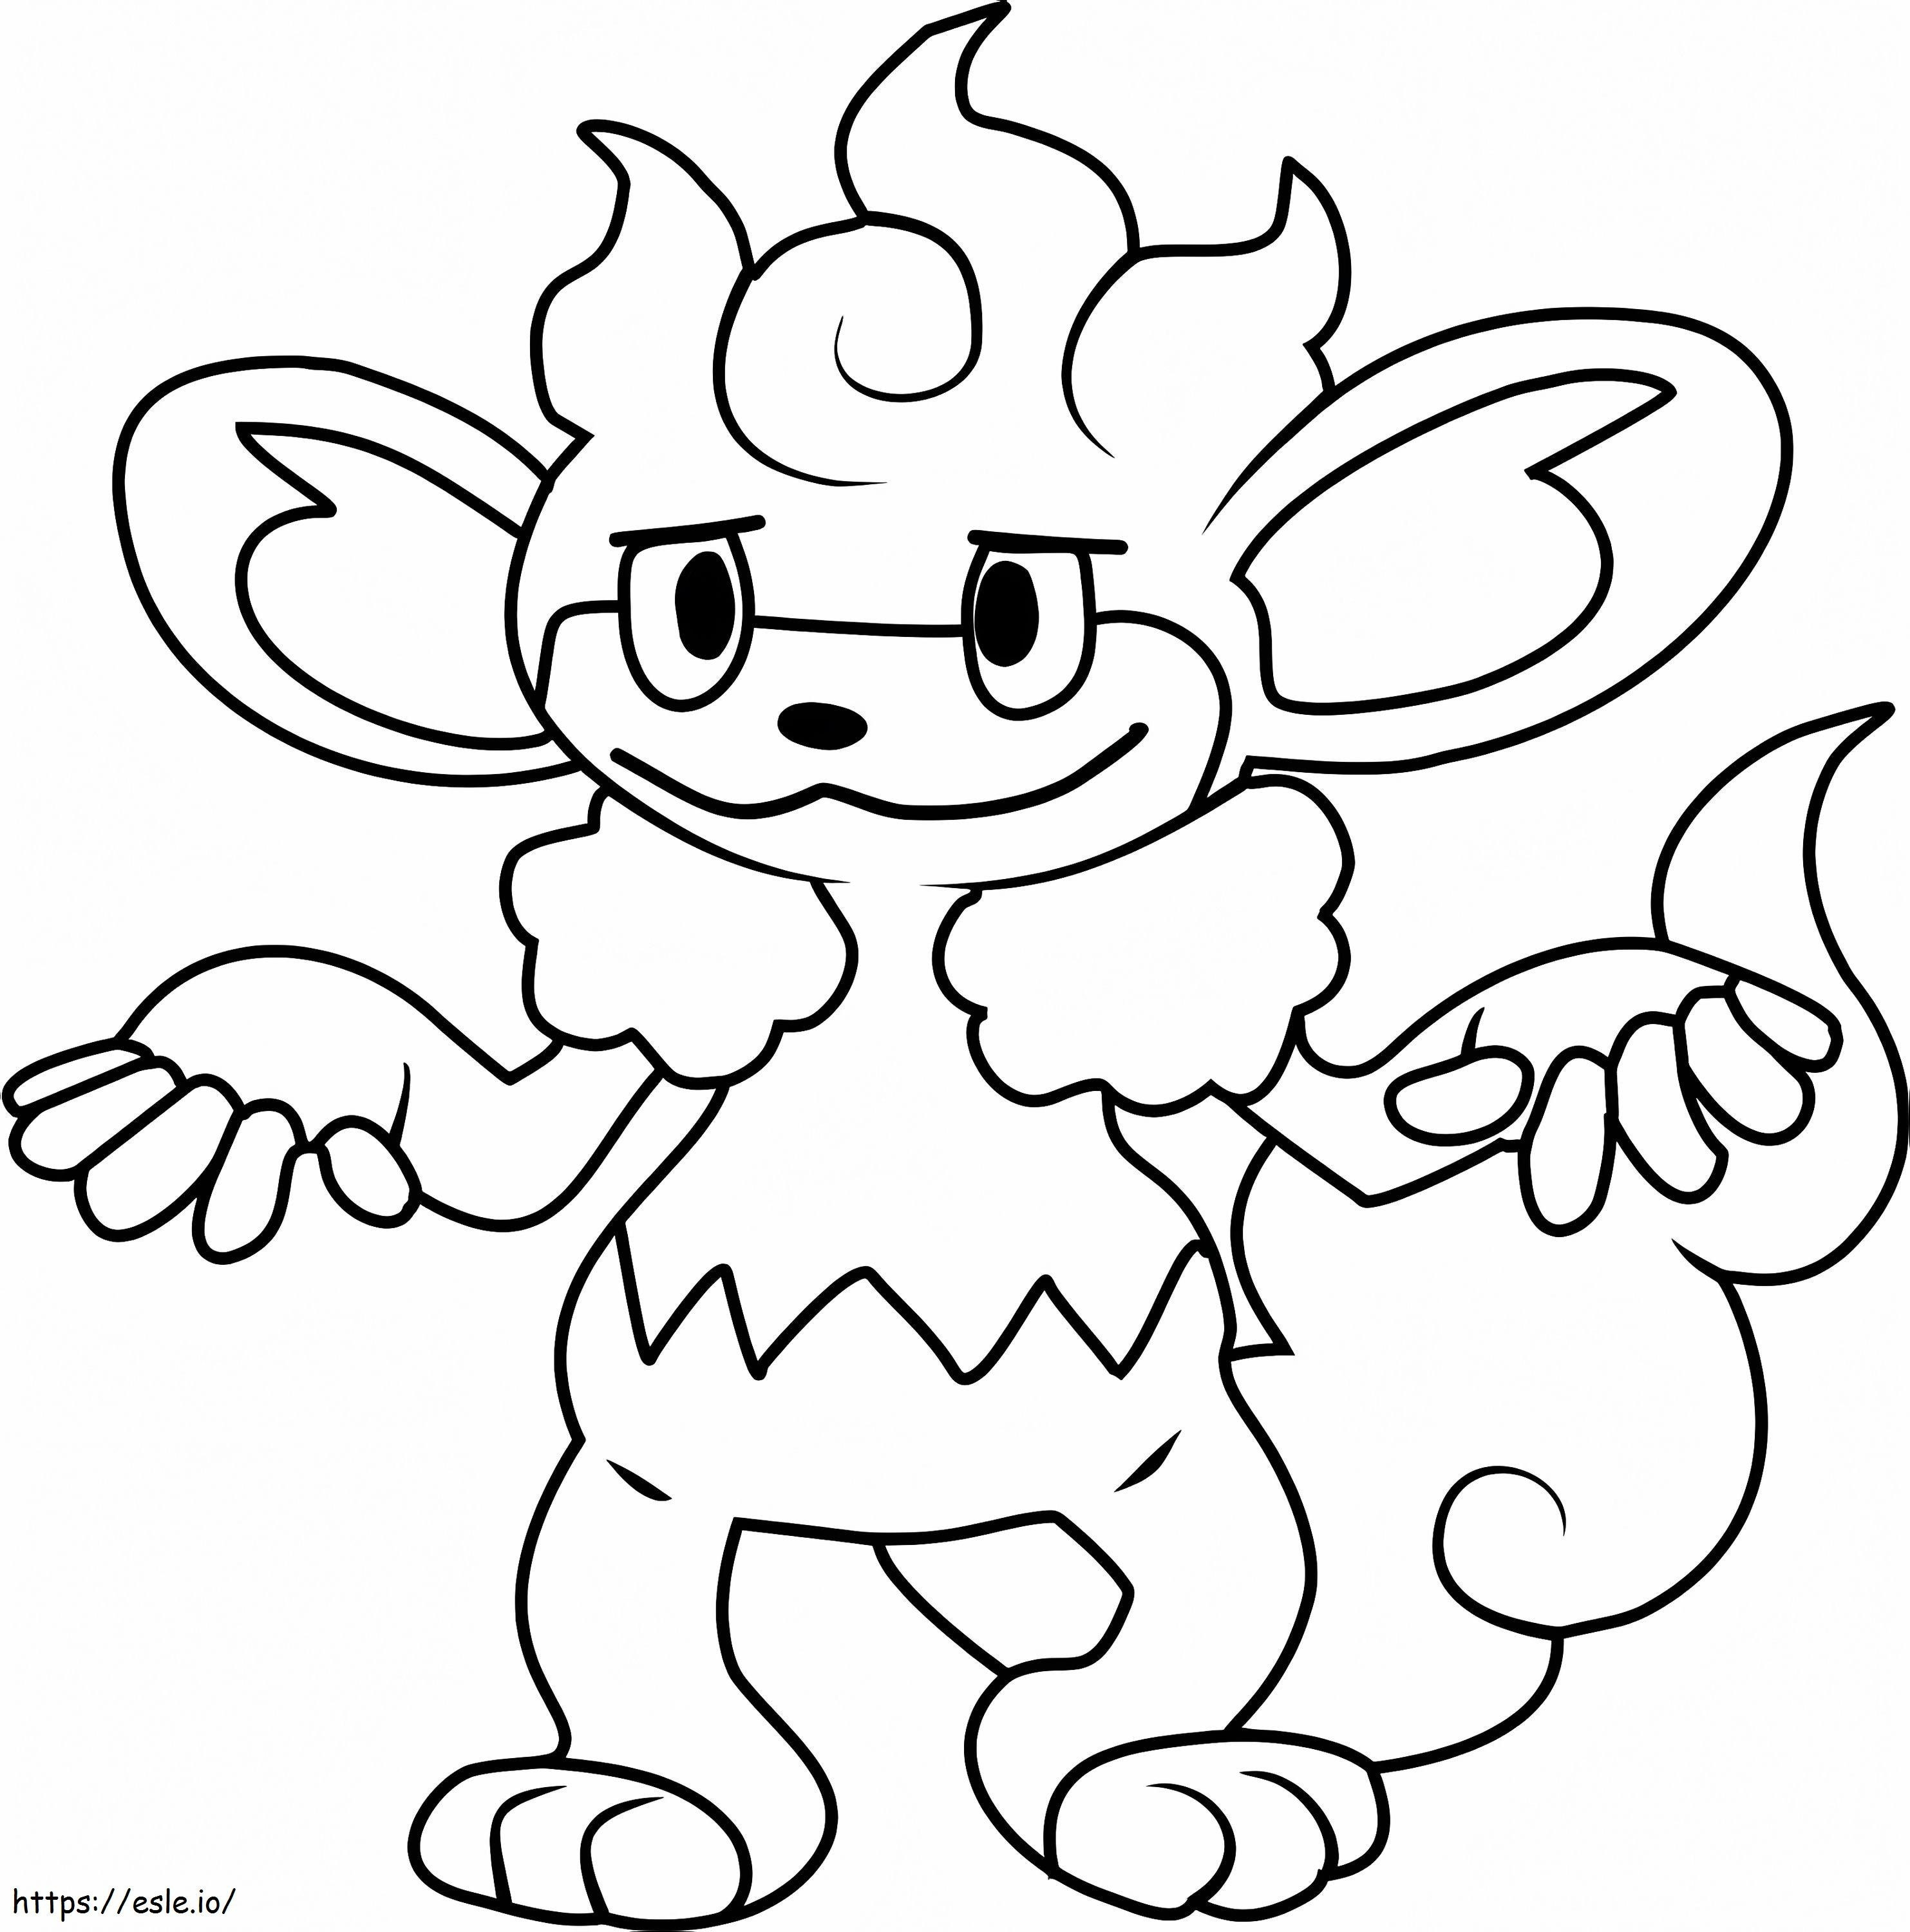 Simsear Gen 5 Pokemon coloring page